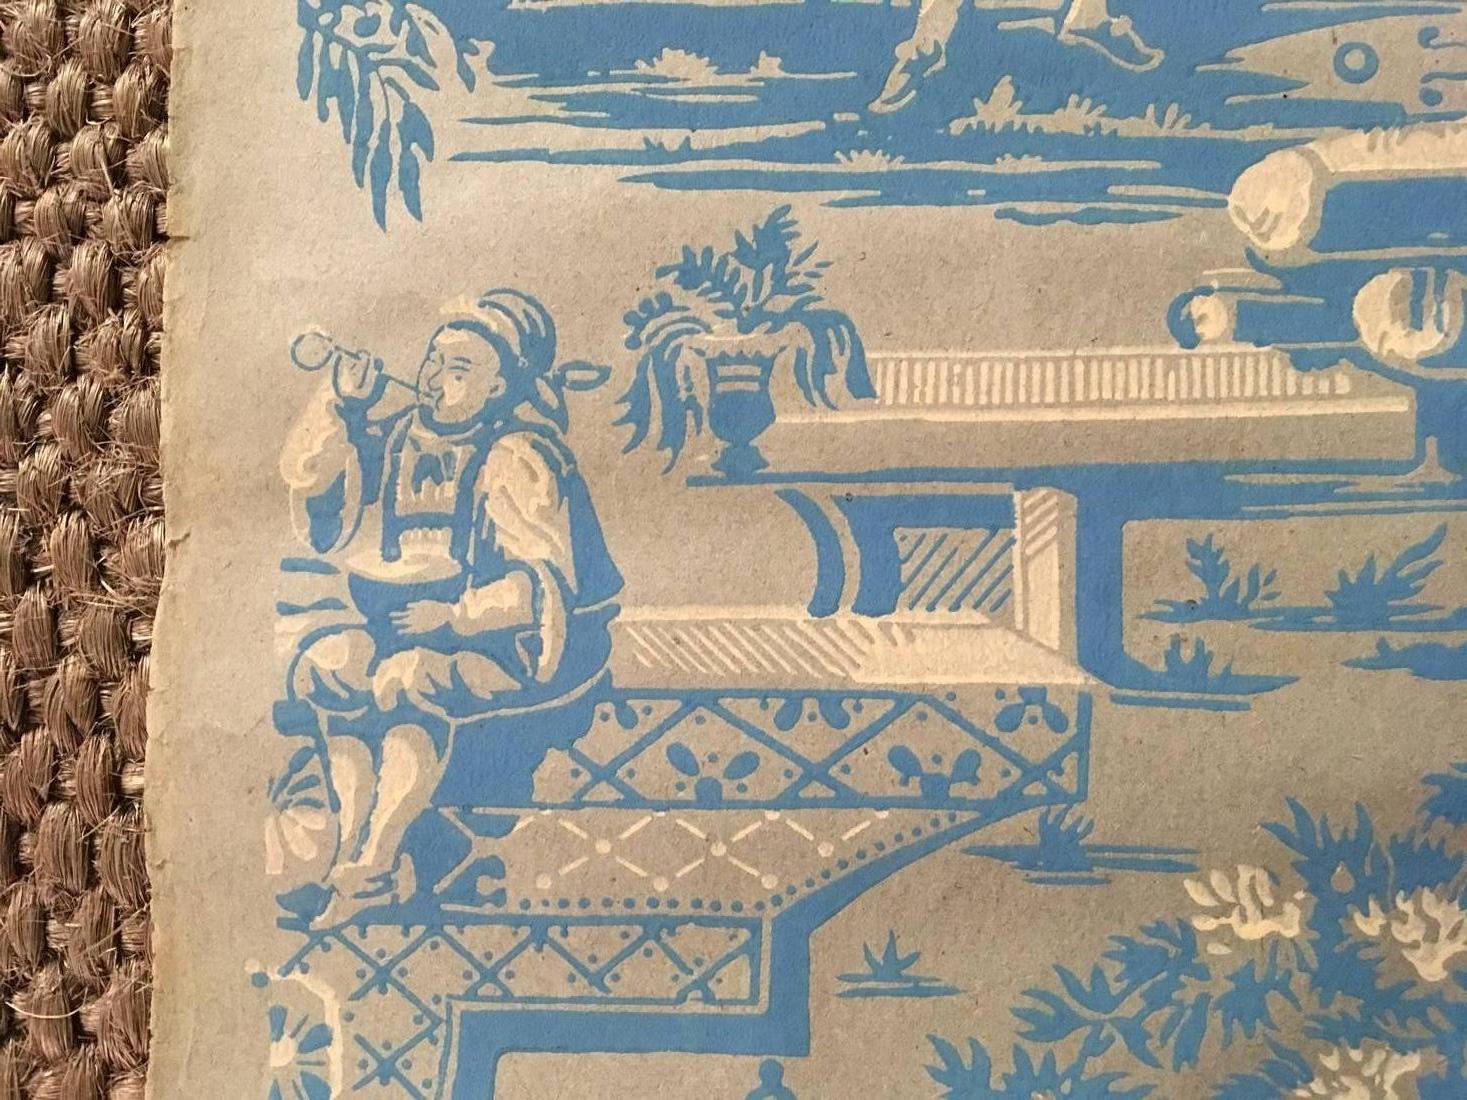 18th century wallpaper patterns